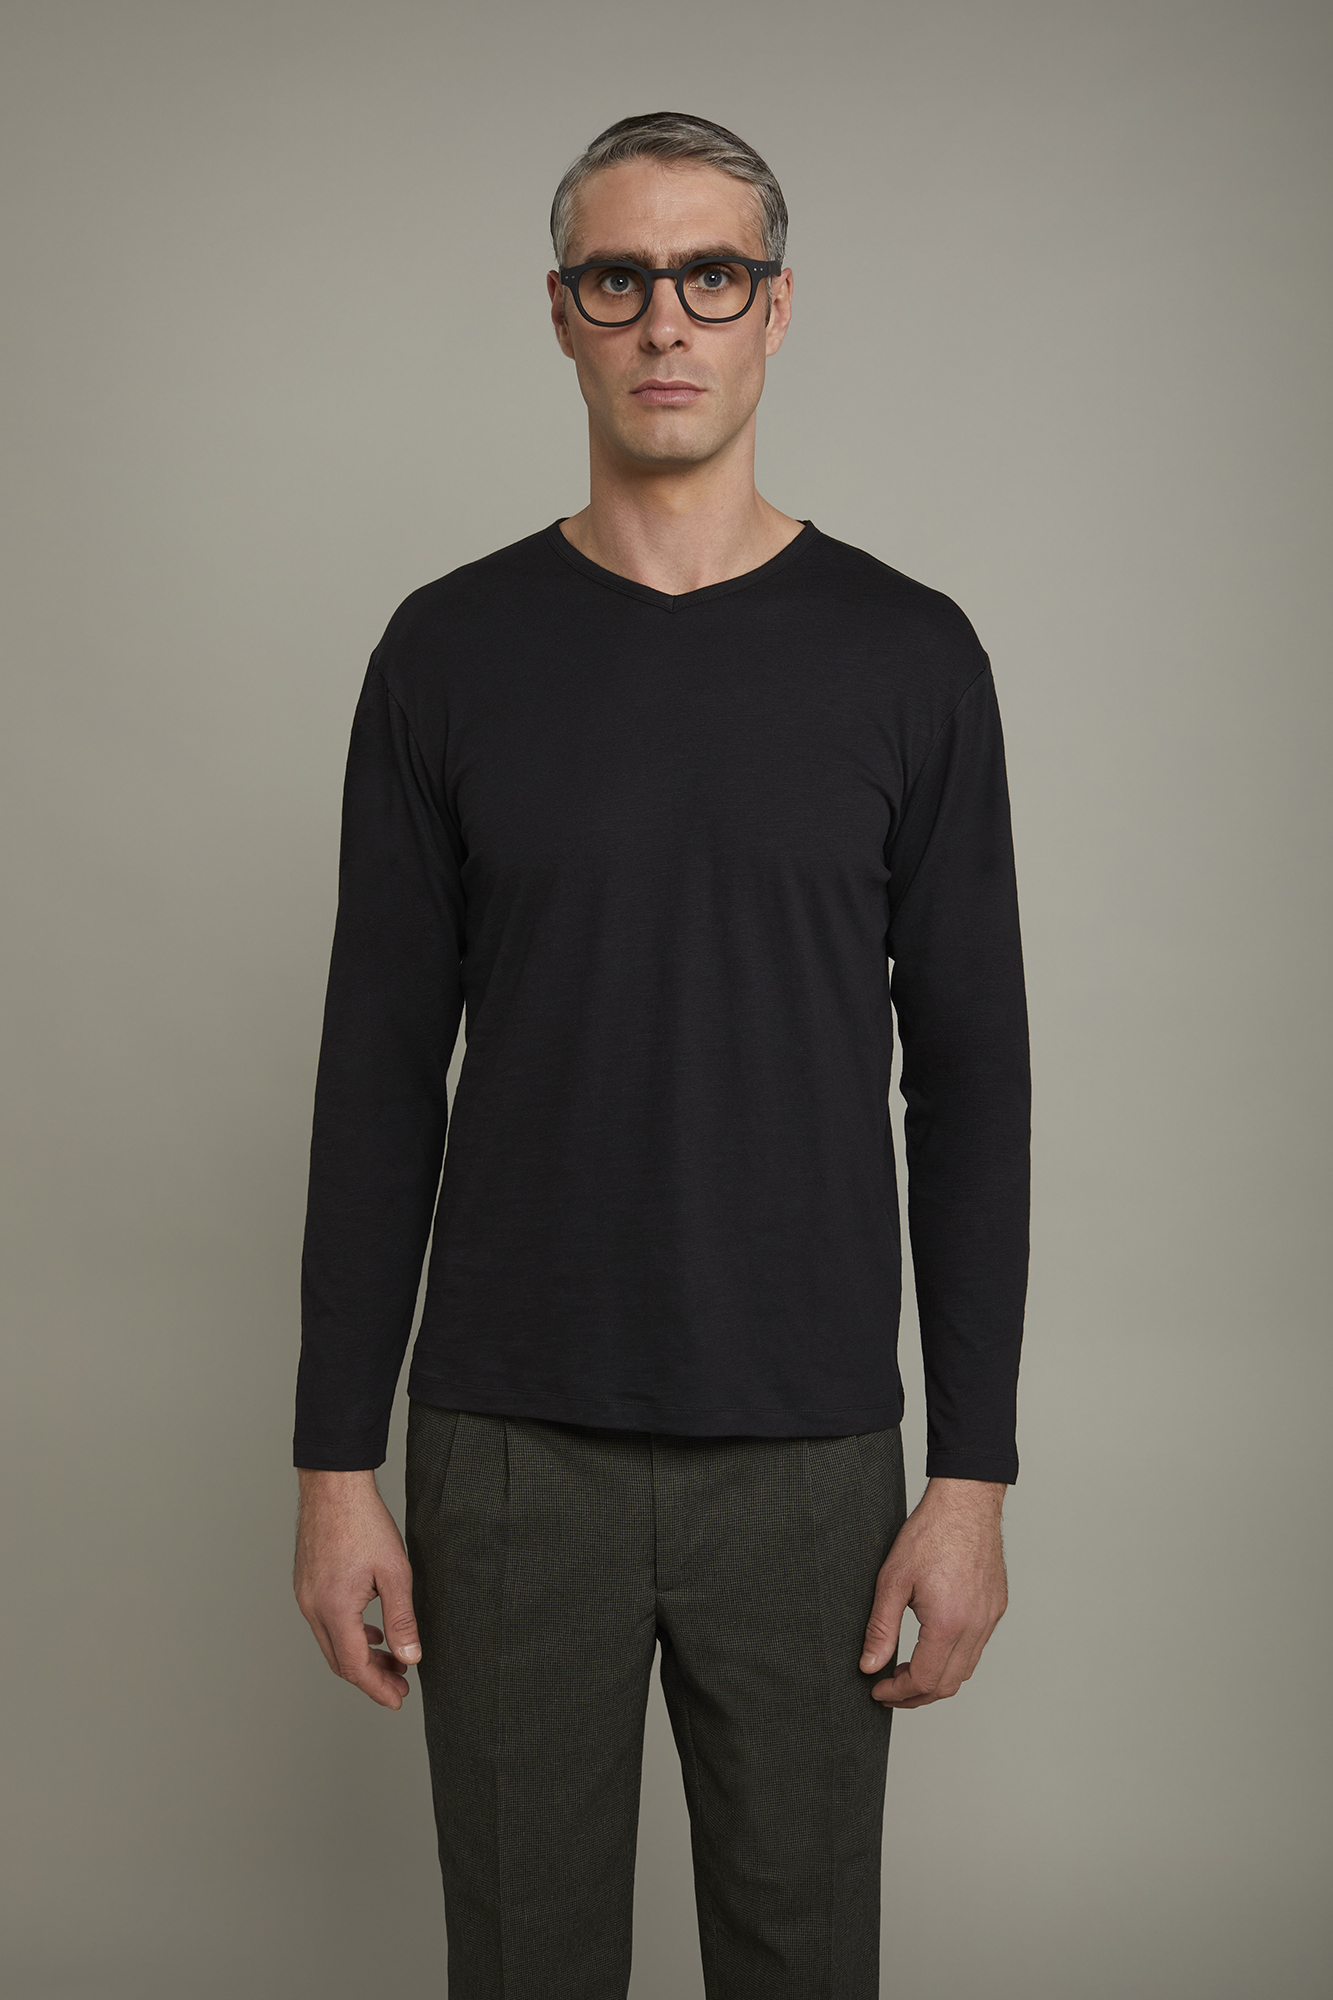 Men’s v-neck t-shirt 100% flamed-effect cotton with long sleeves regular fit image number null